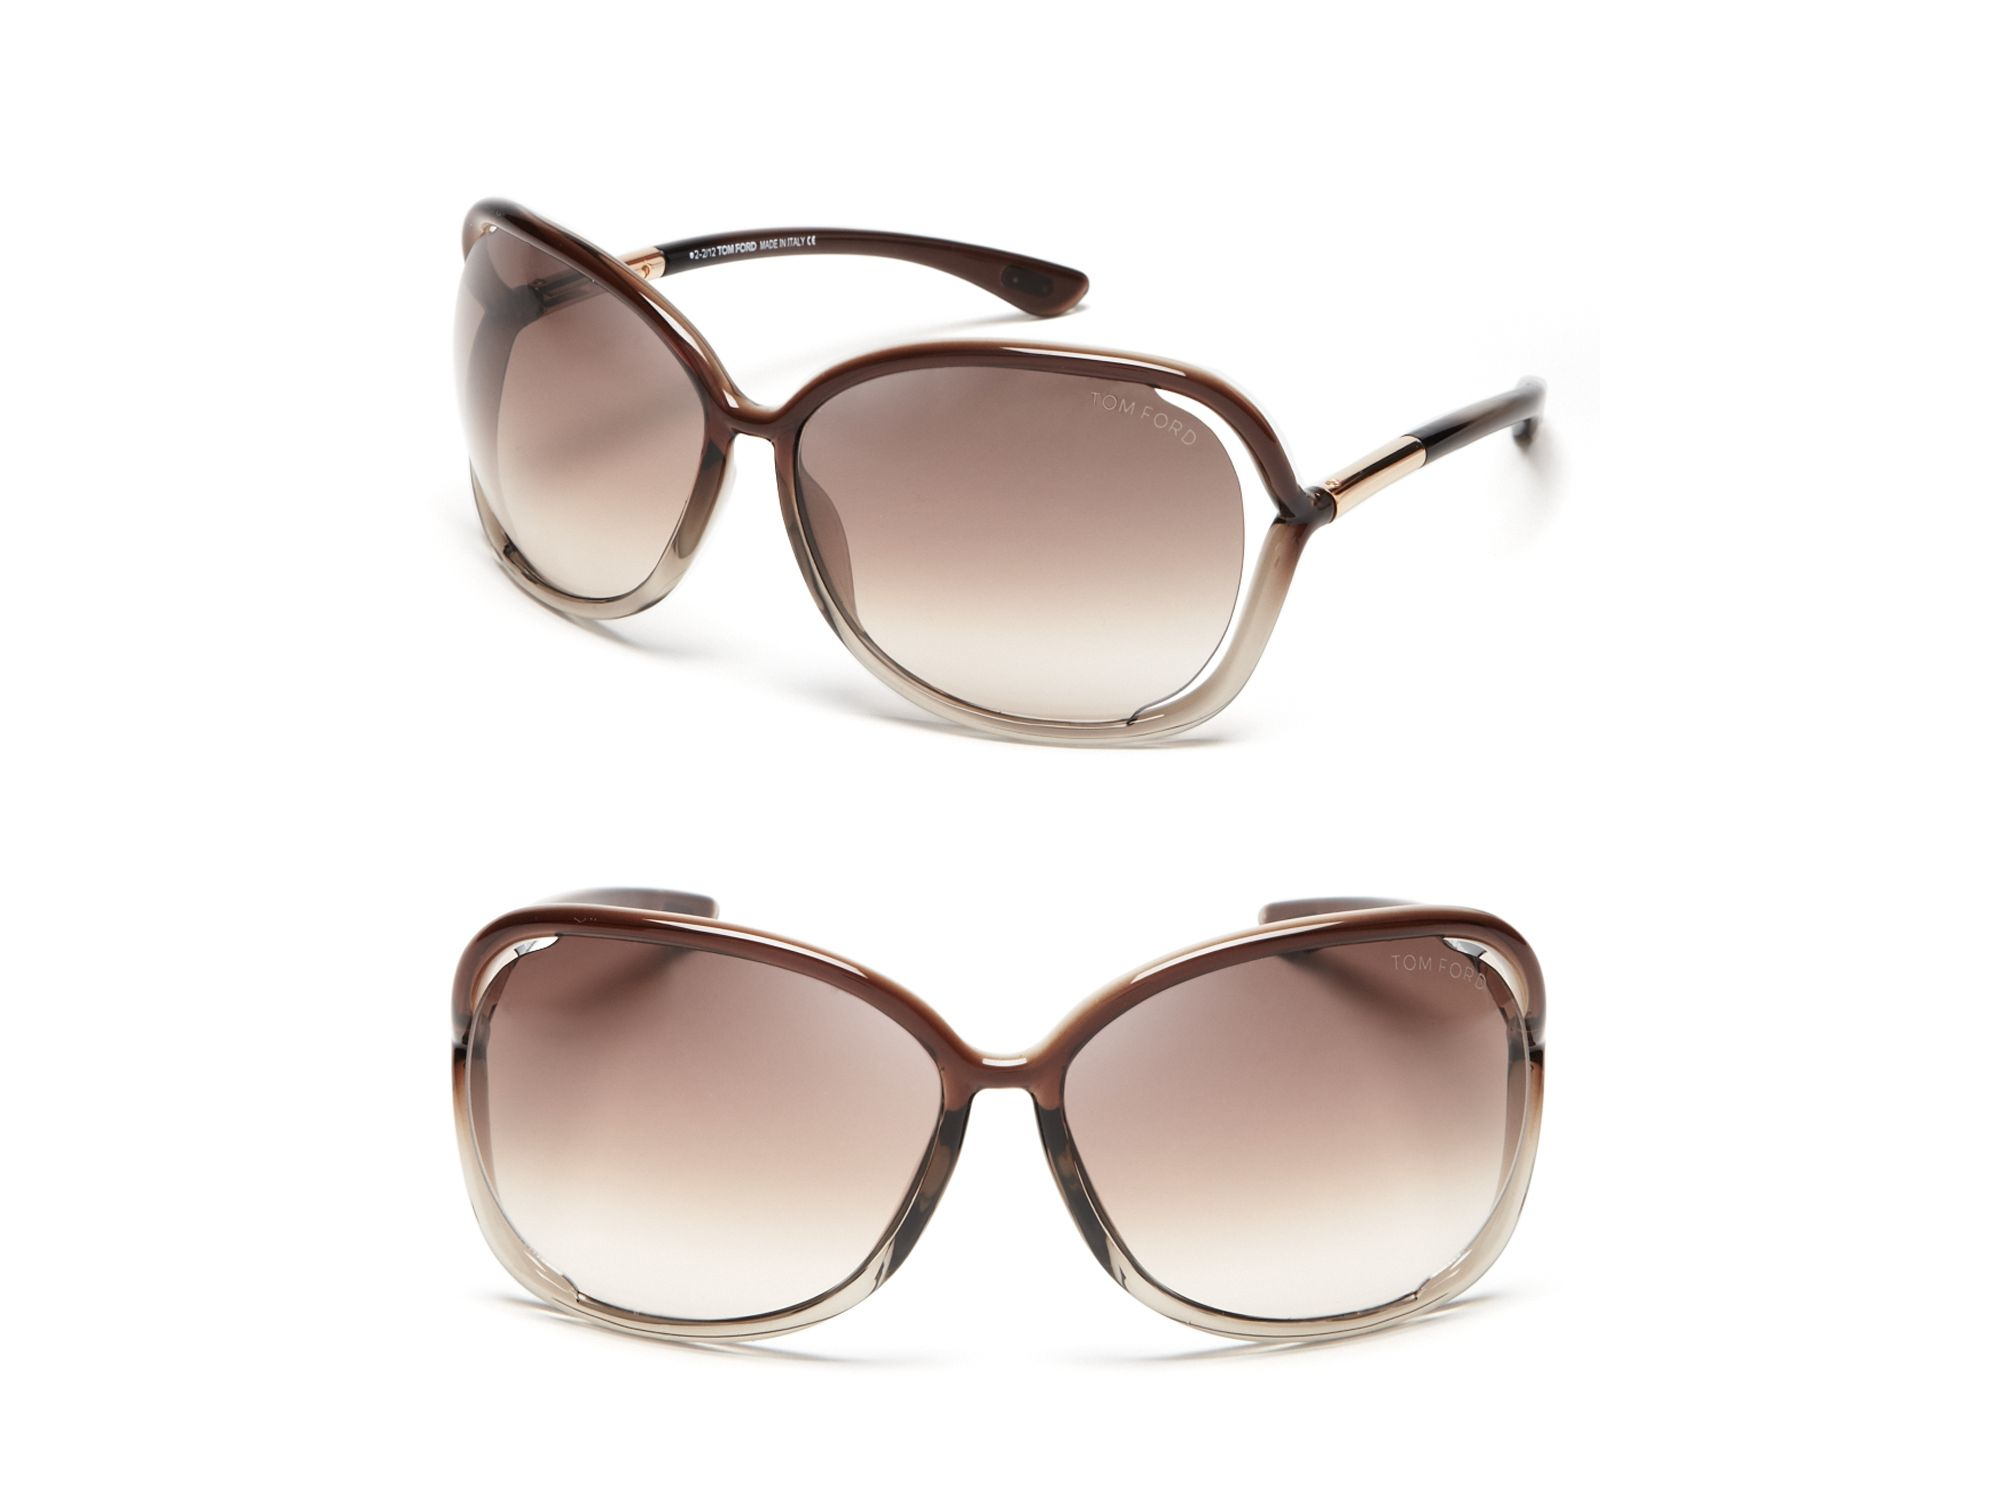 Tom Ford Raquel Sunglasses, 63mm in Metallic |